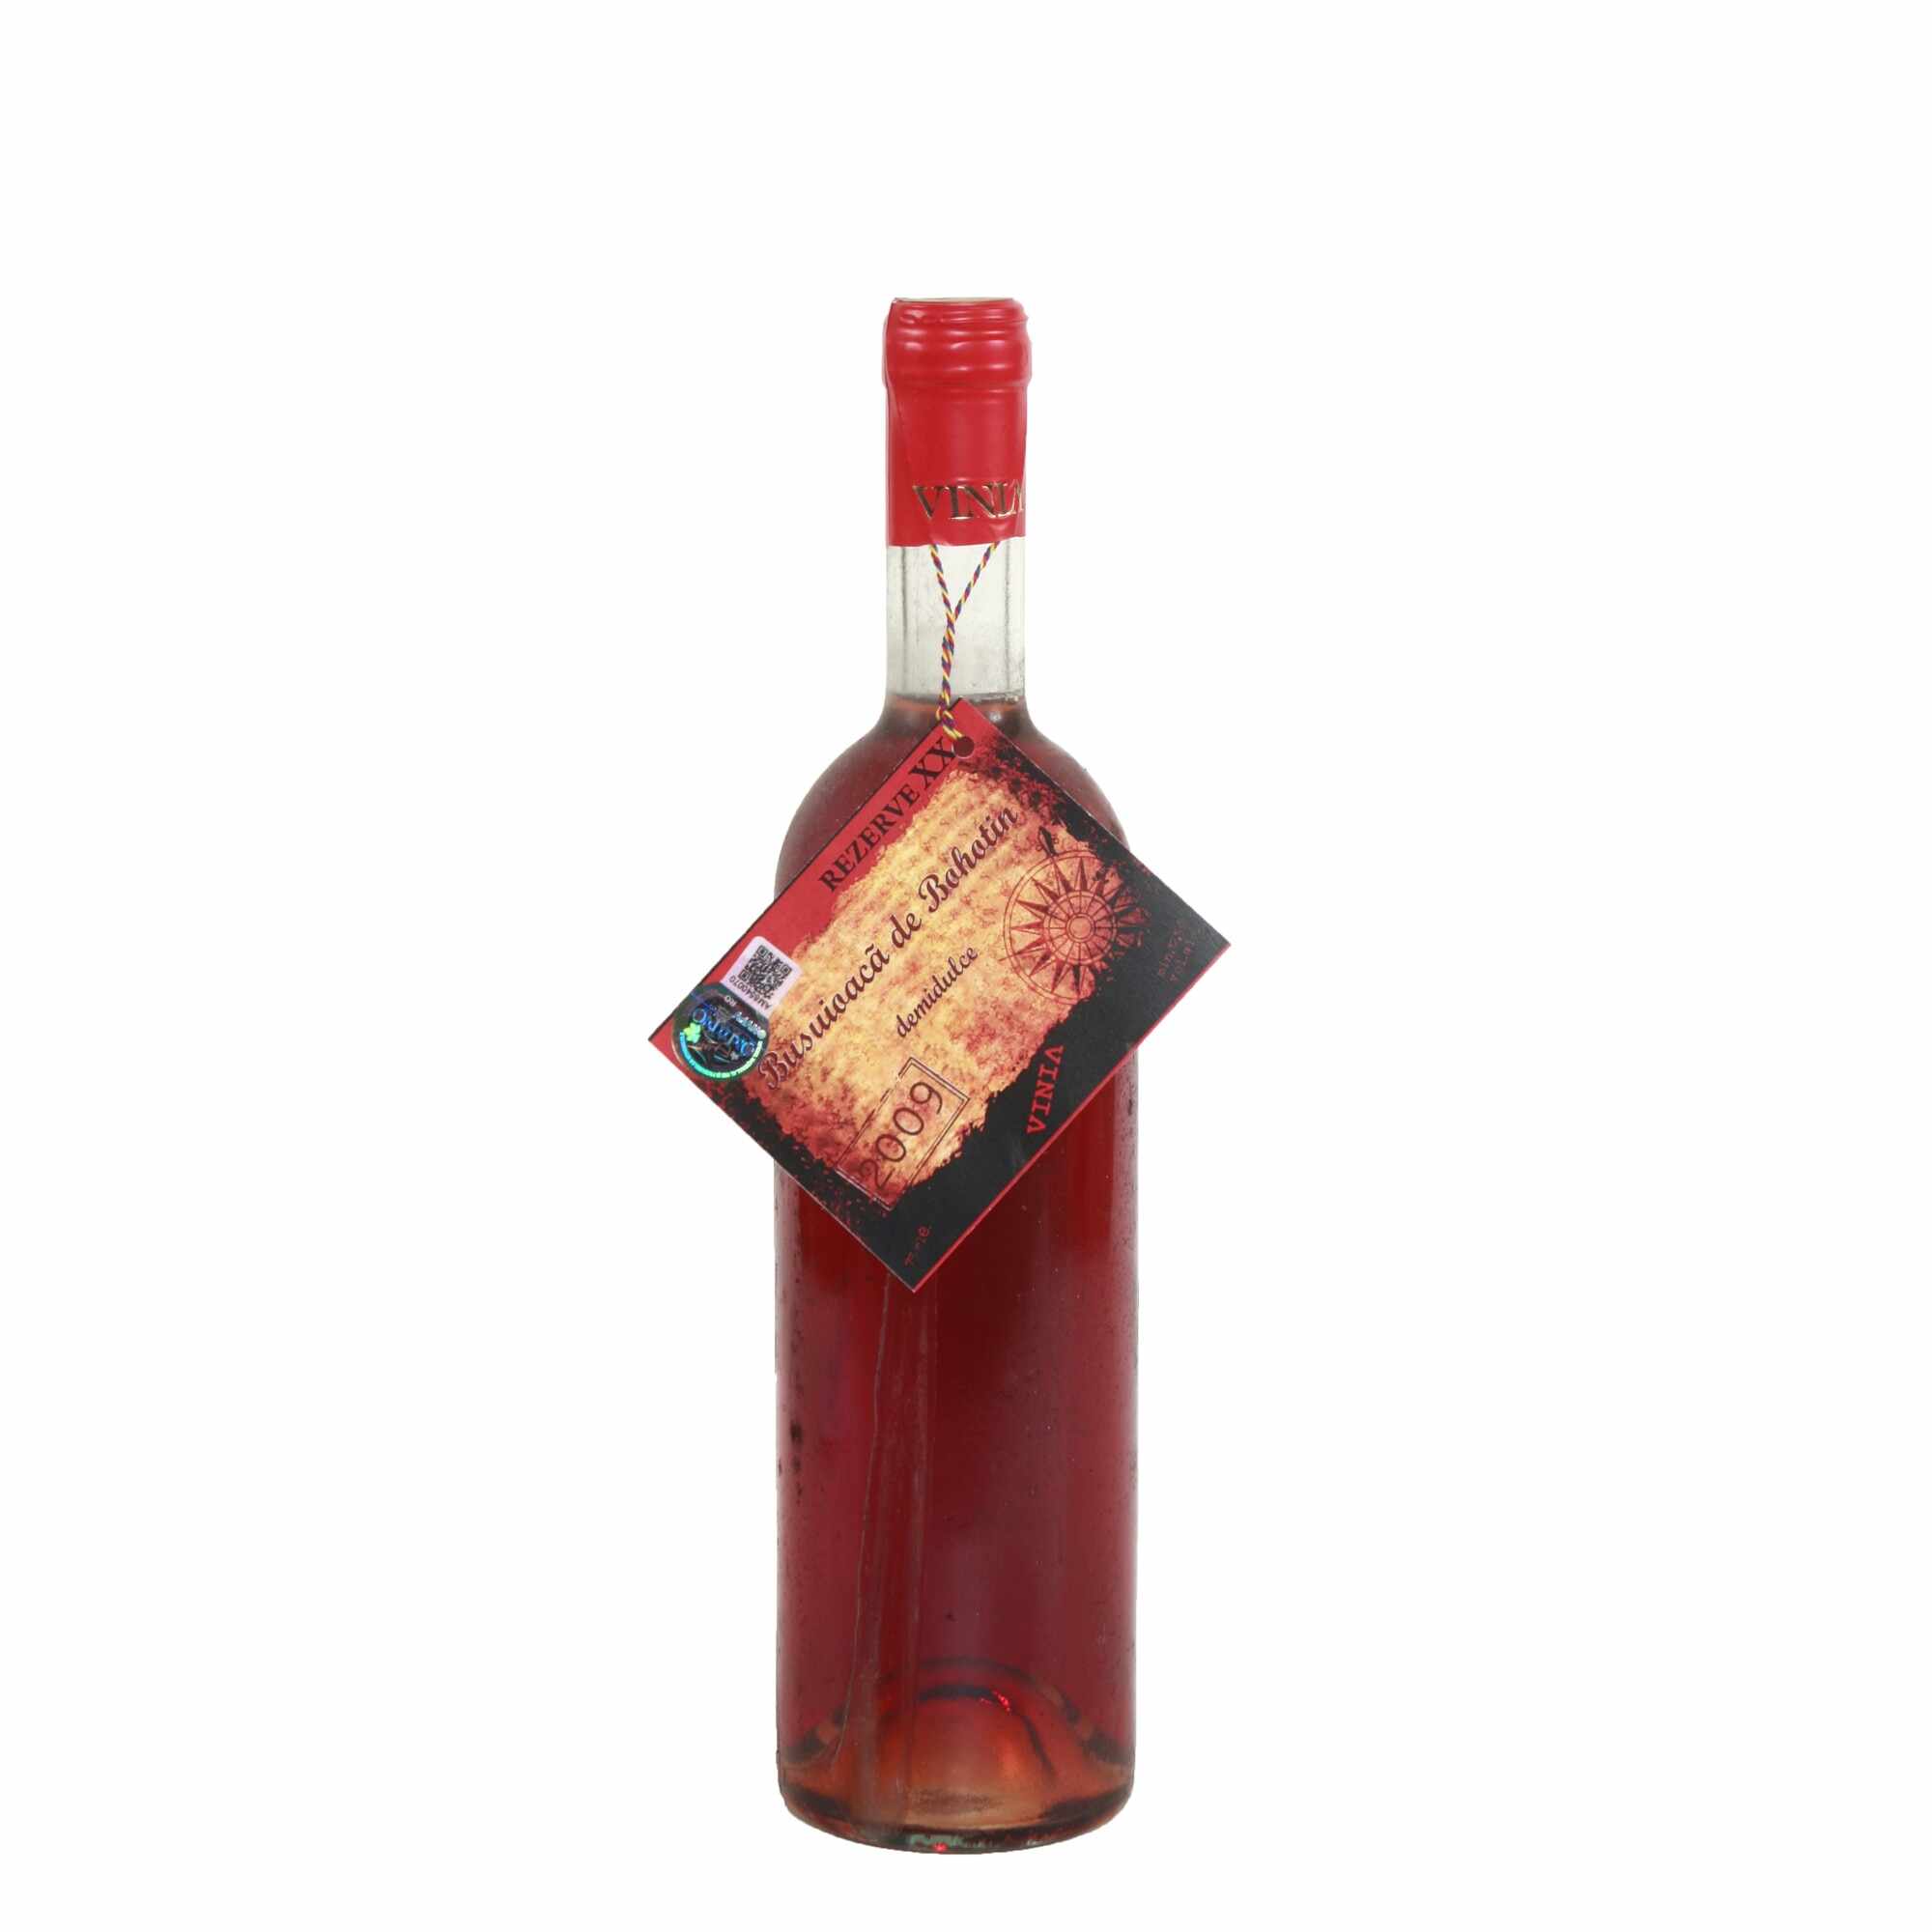 Vin roze,Busuioaca Bohotin, 2009,Podgoria Bohotin, demi dulce, Vinia, 0.75 l